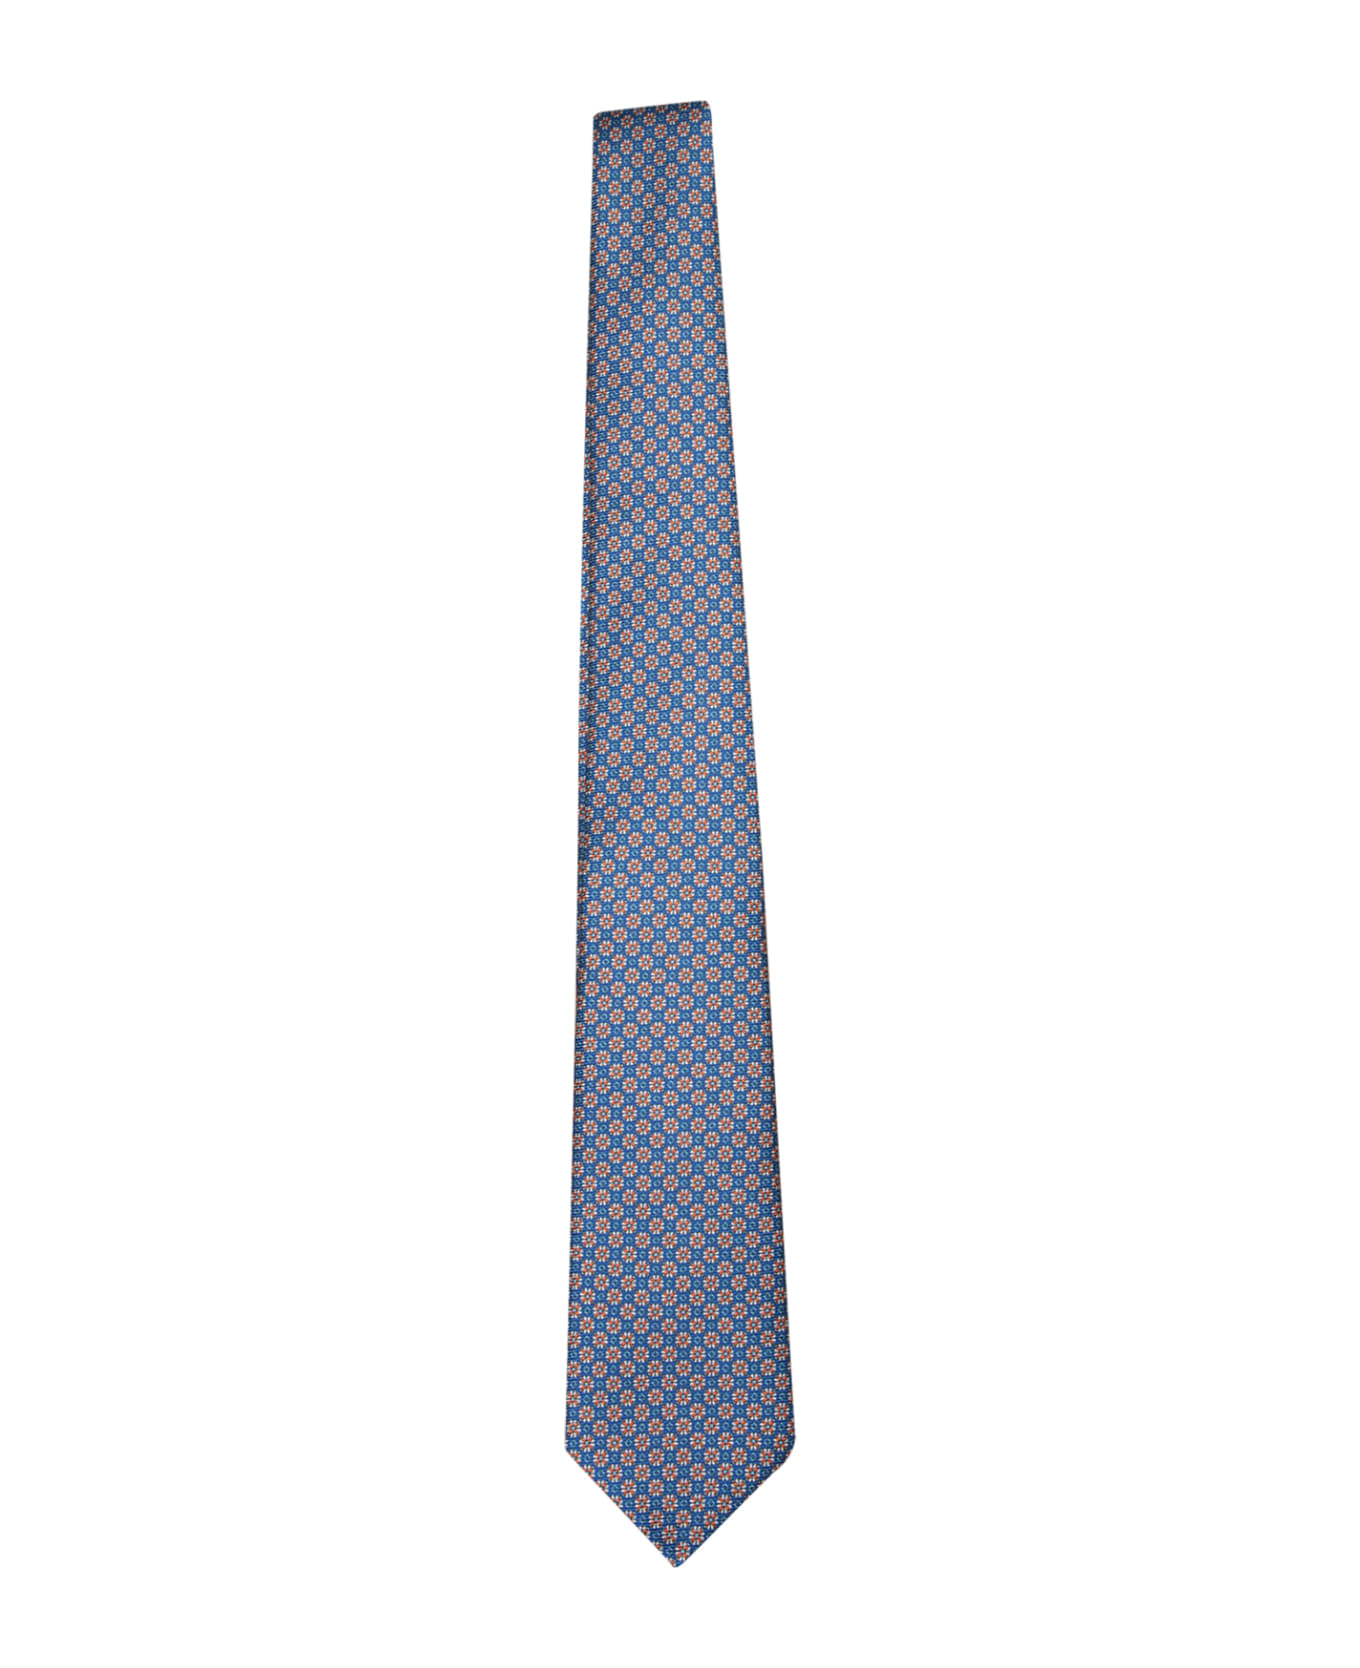 Kiton Patterned Tie Blue/green/orange - Blue